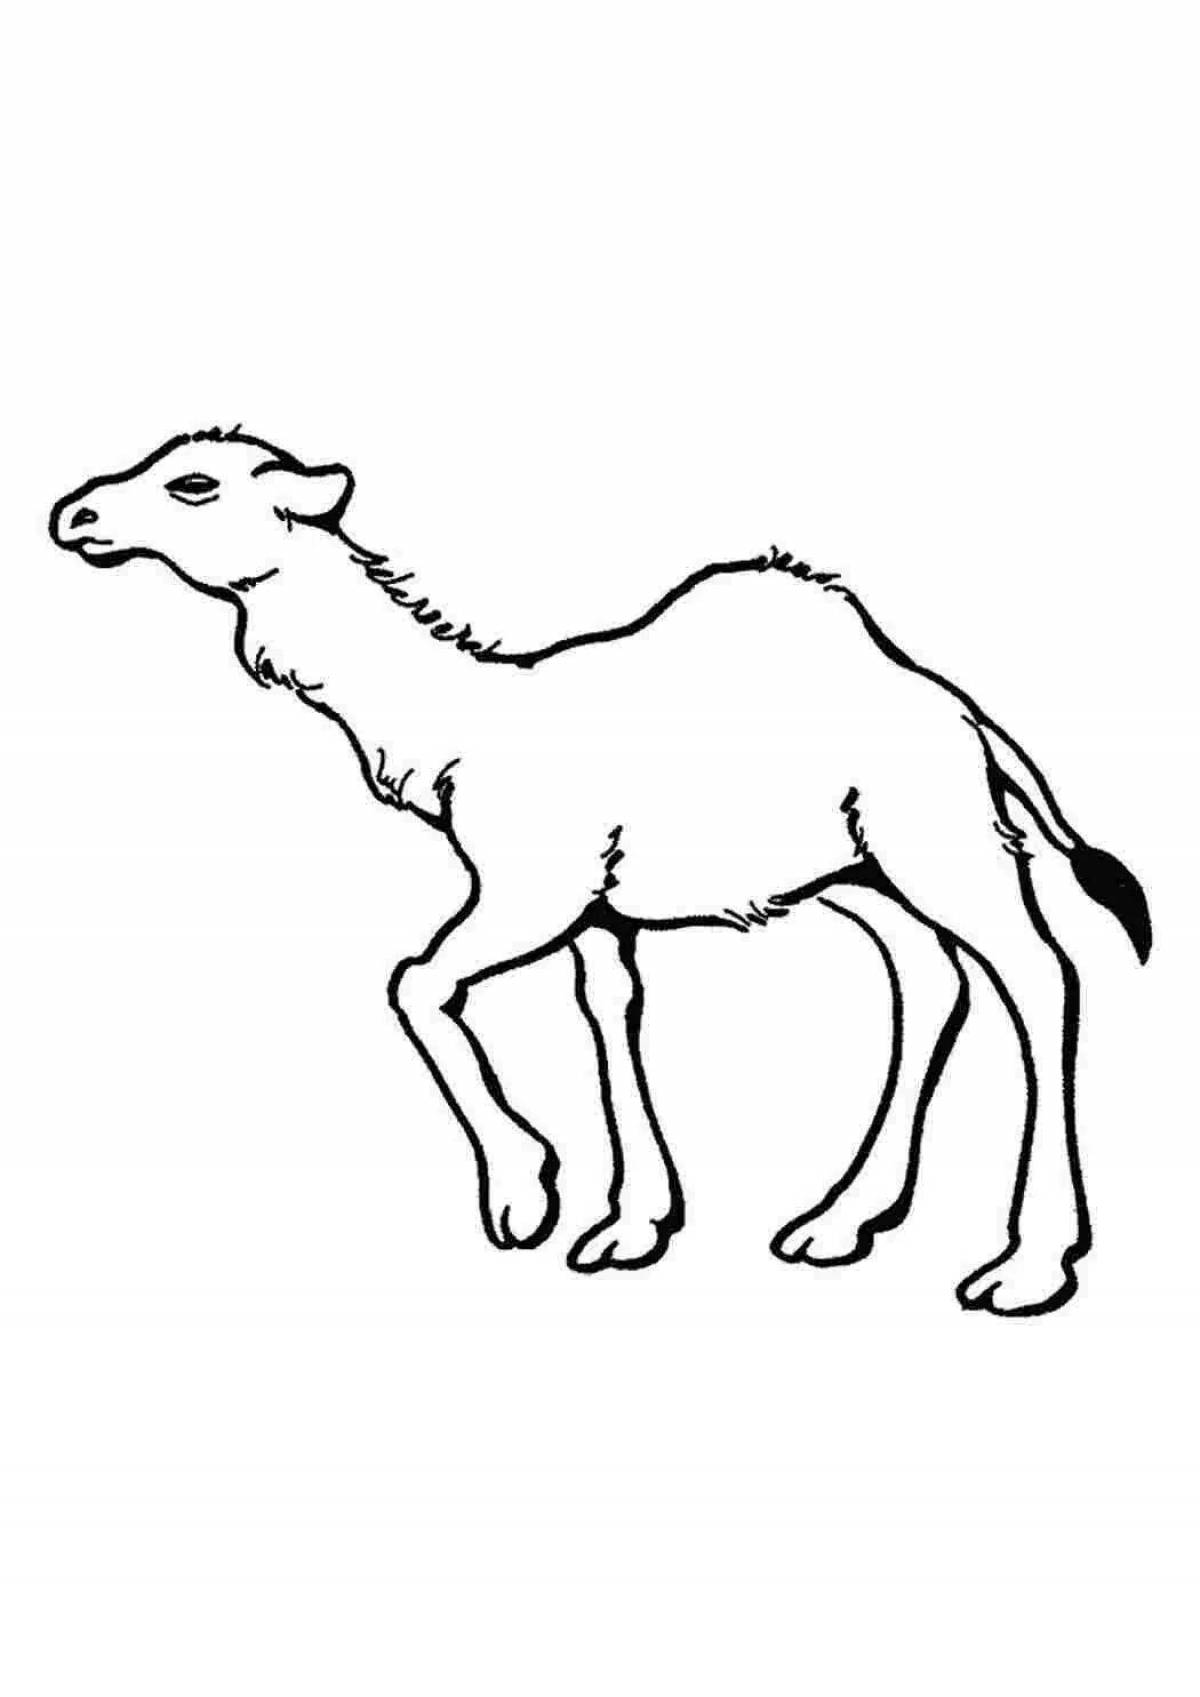 Royal camel coloring page